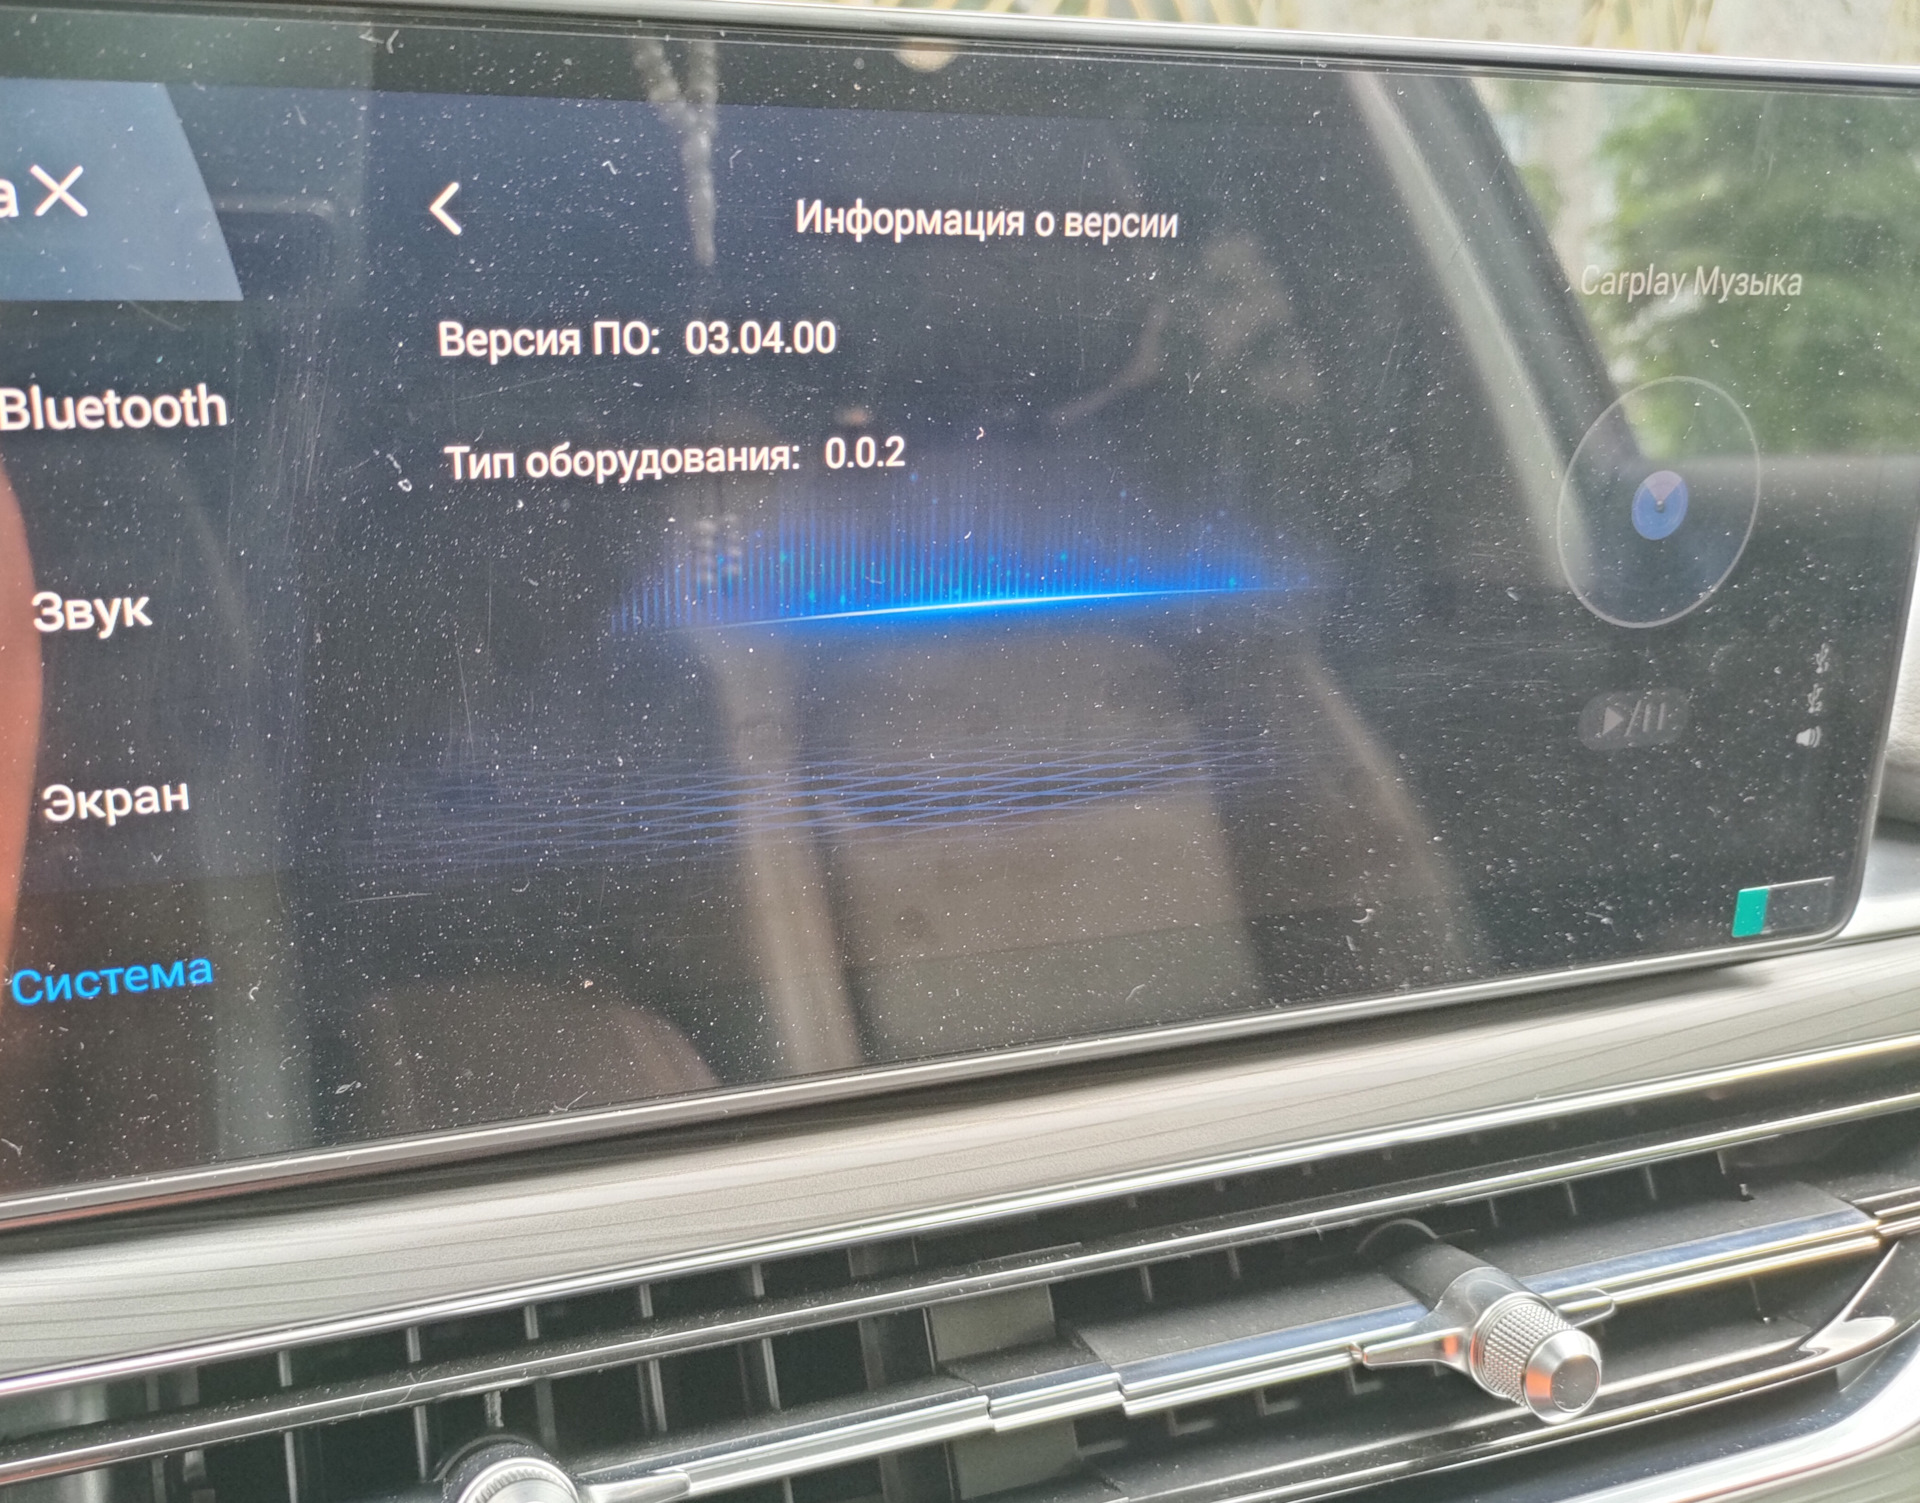 Прошивка чери тигго 8. Активация поворотного света Chery Tiggo 8 Pro Max. Chery Tiggo 7 Pro Max подключение Android auto. Как подключить телефон к андроид авто чери Тигго 8.